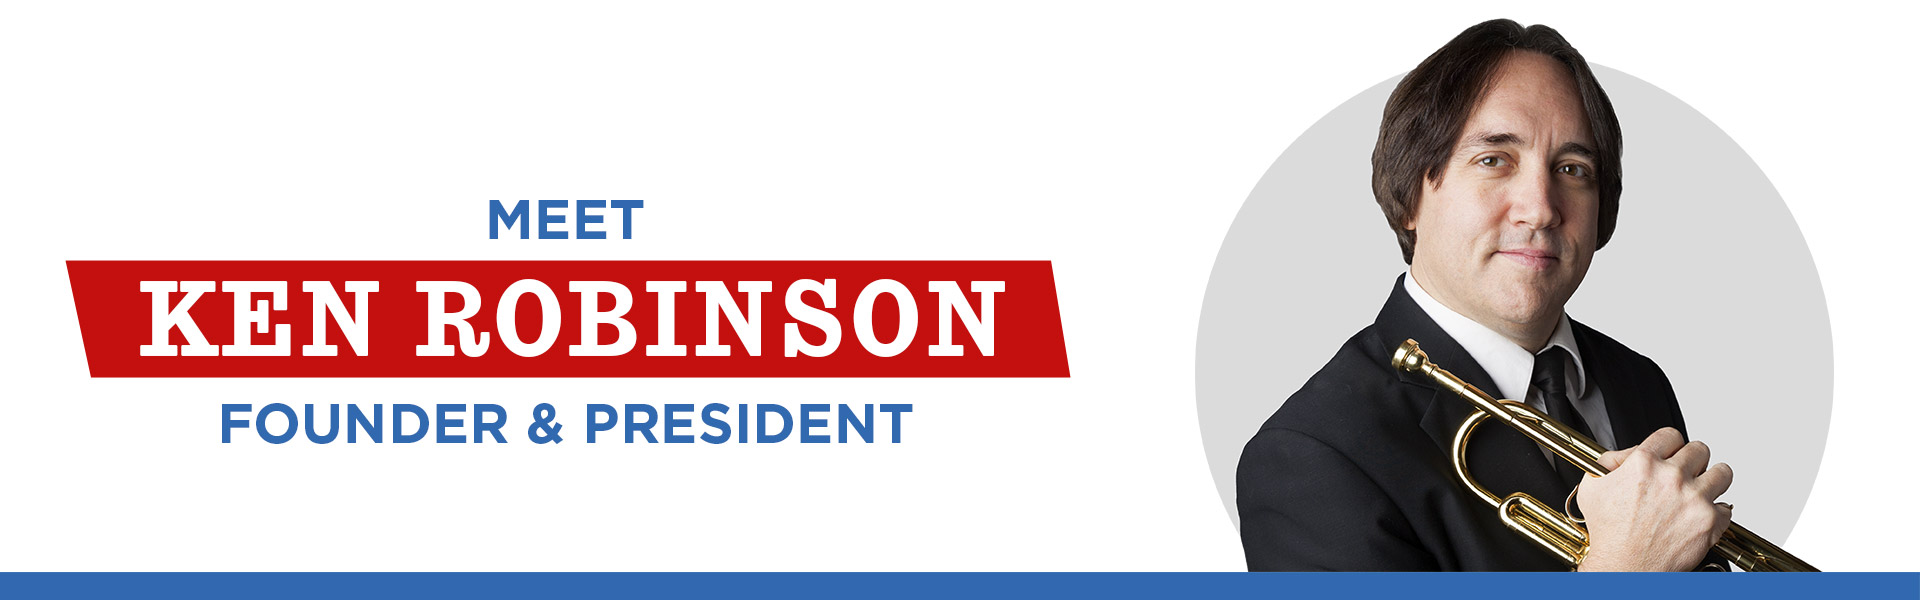 Ken Robinson - Founder & President